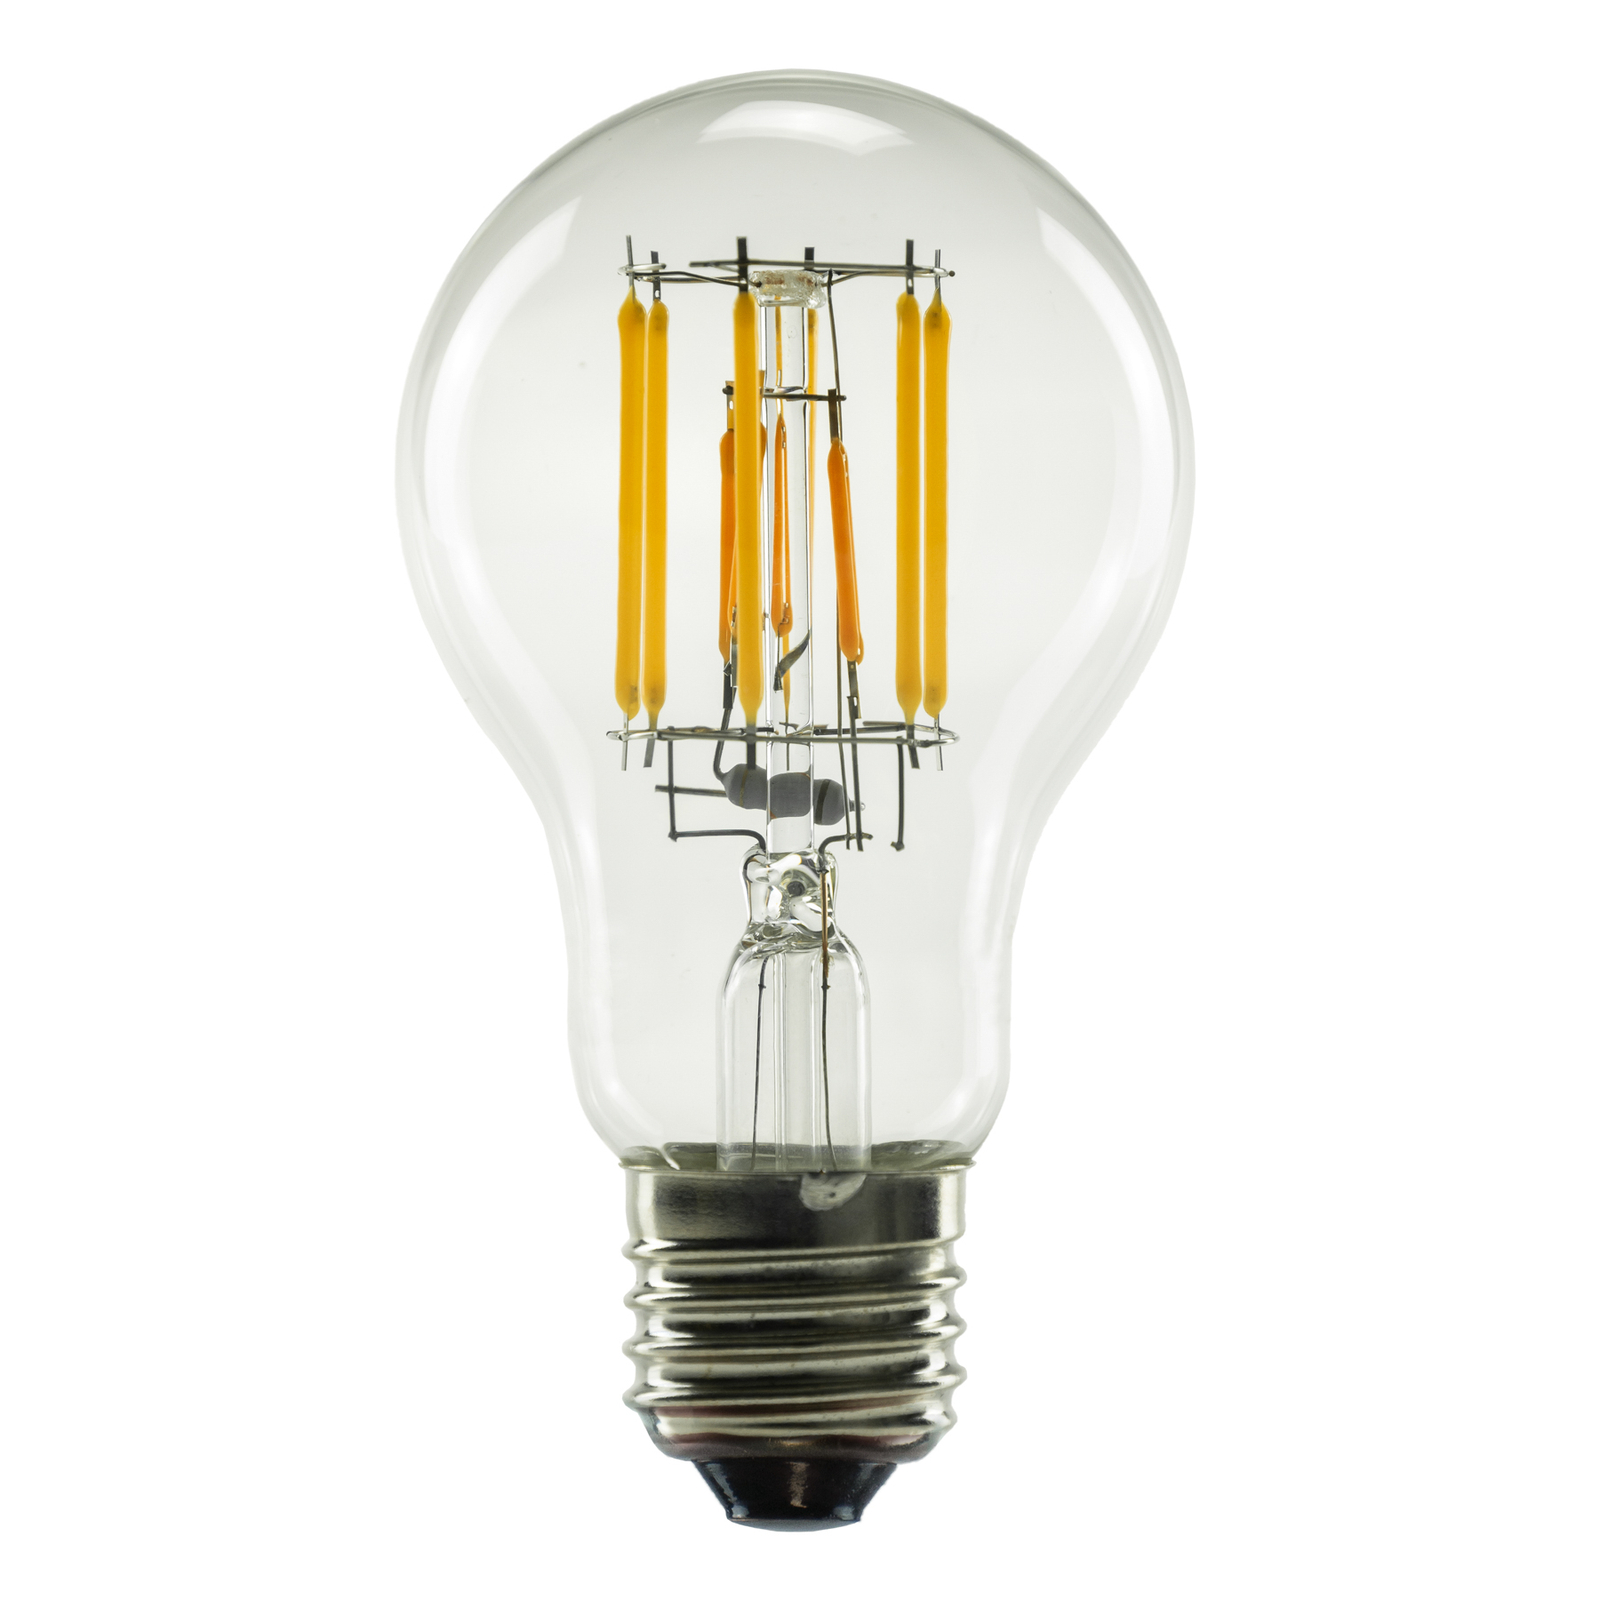 Stor vrangforestilling butik bad SEGULA LED bulb E27 6.5W filament, ambient dimming | Lights.co.uk